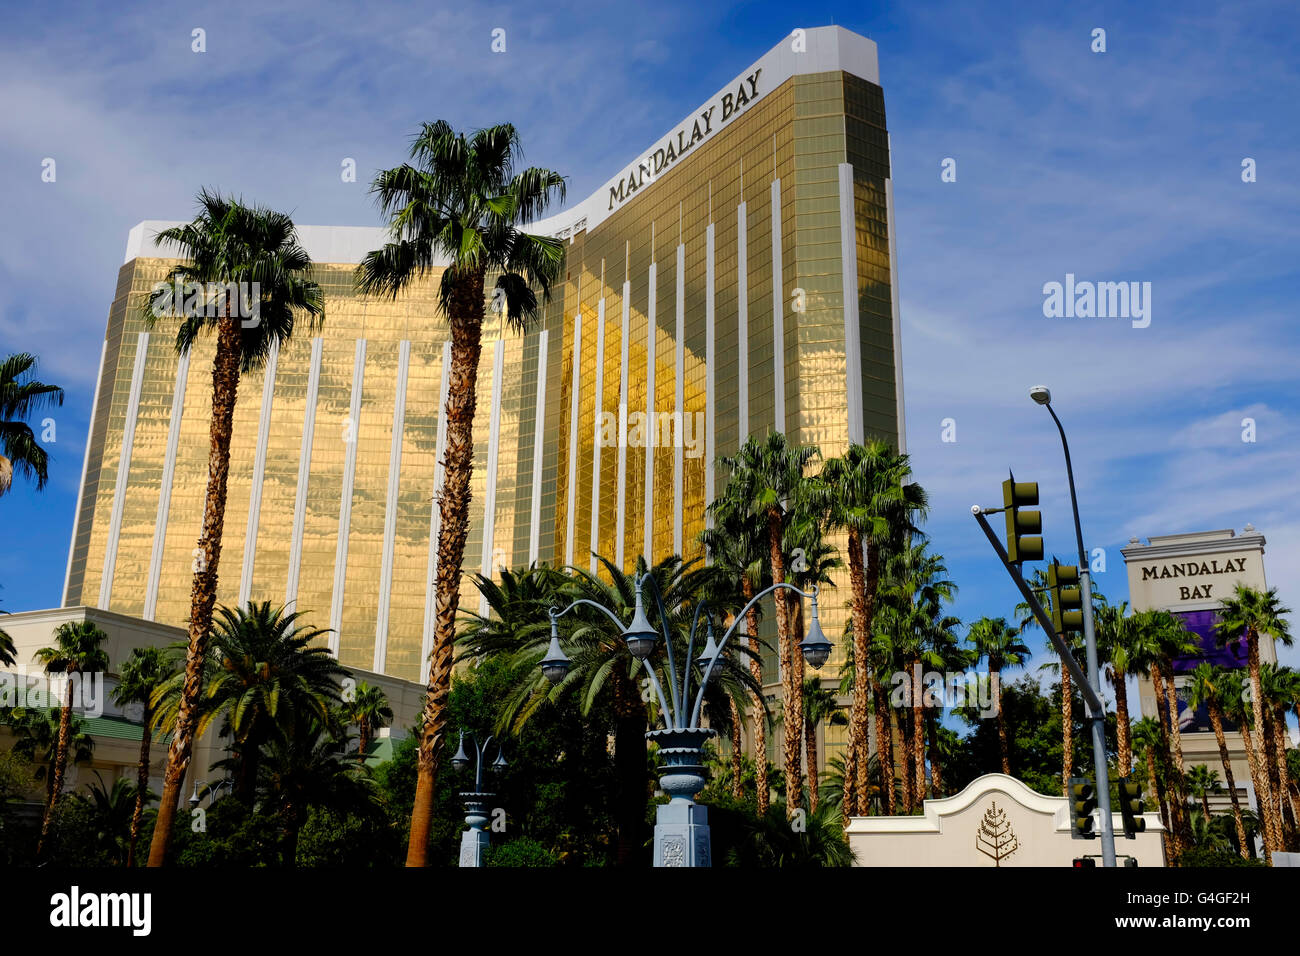 Mandalay Bay Hotel and Casino, Las Vegas, Nevada, United States Banque D'Images